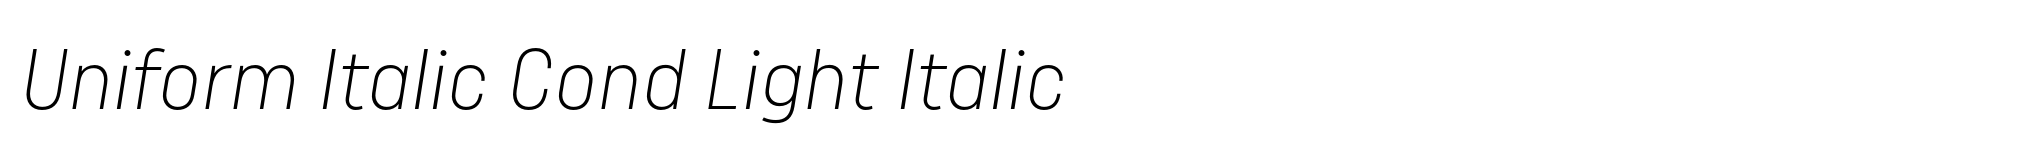 Uniform Italic Cond Light Italic image